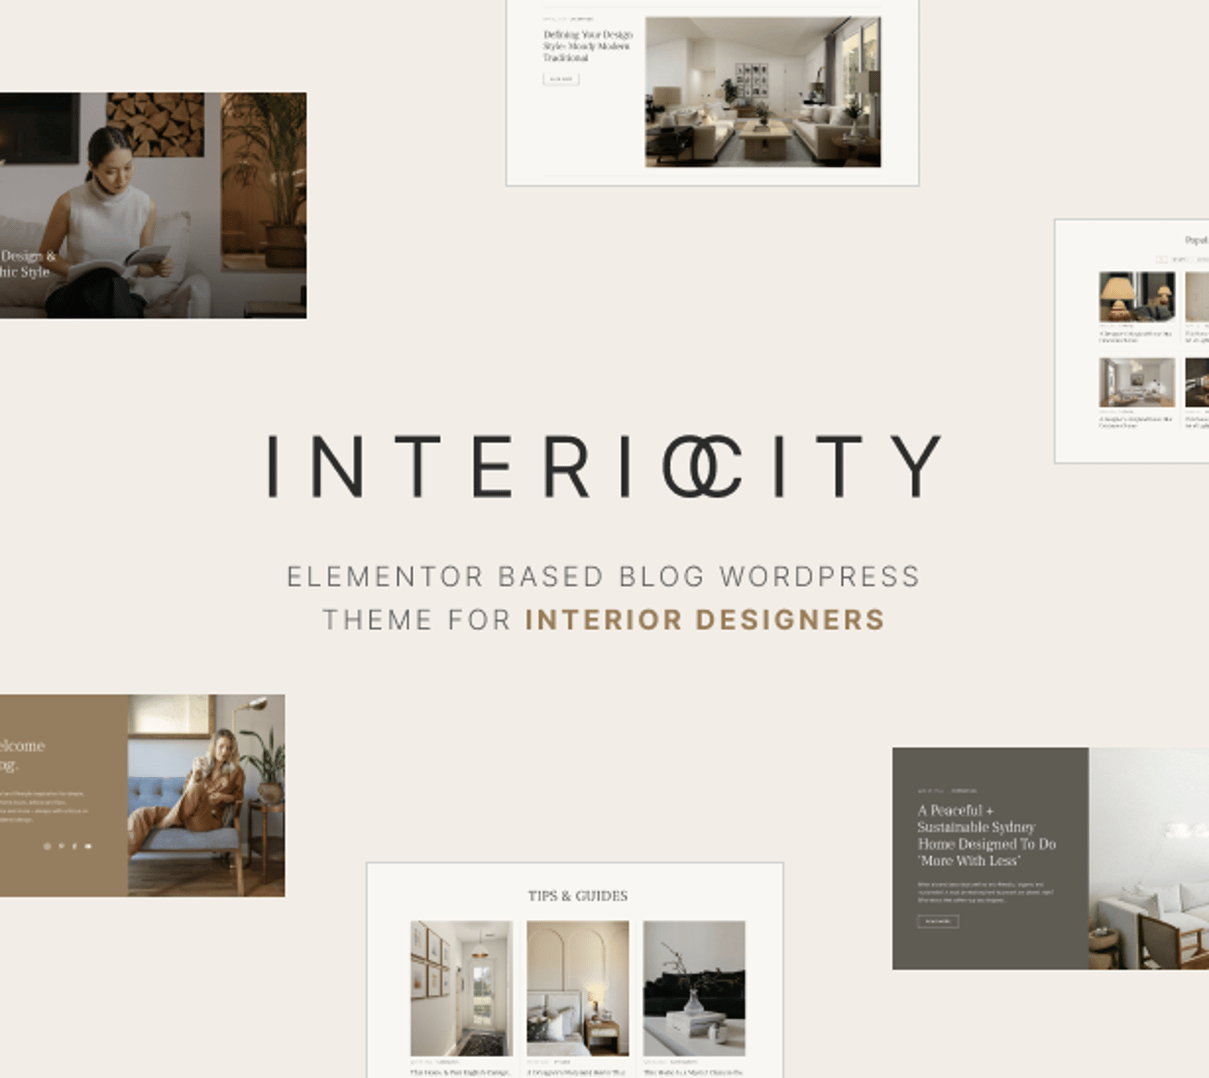 Interiocity - Home Decor Blog and Interior Design Magazine WordPress Theme | CMSMasters studio